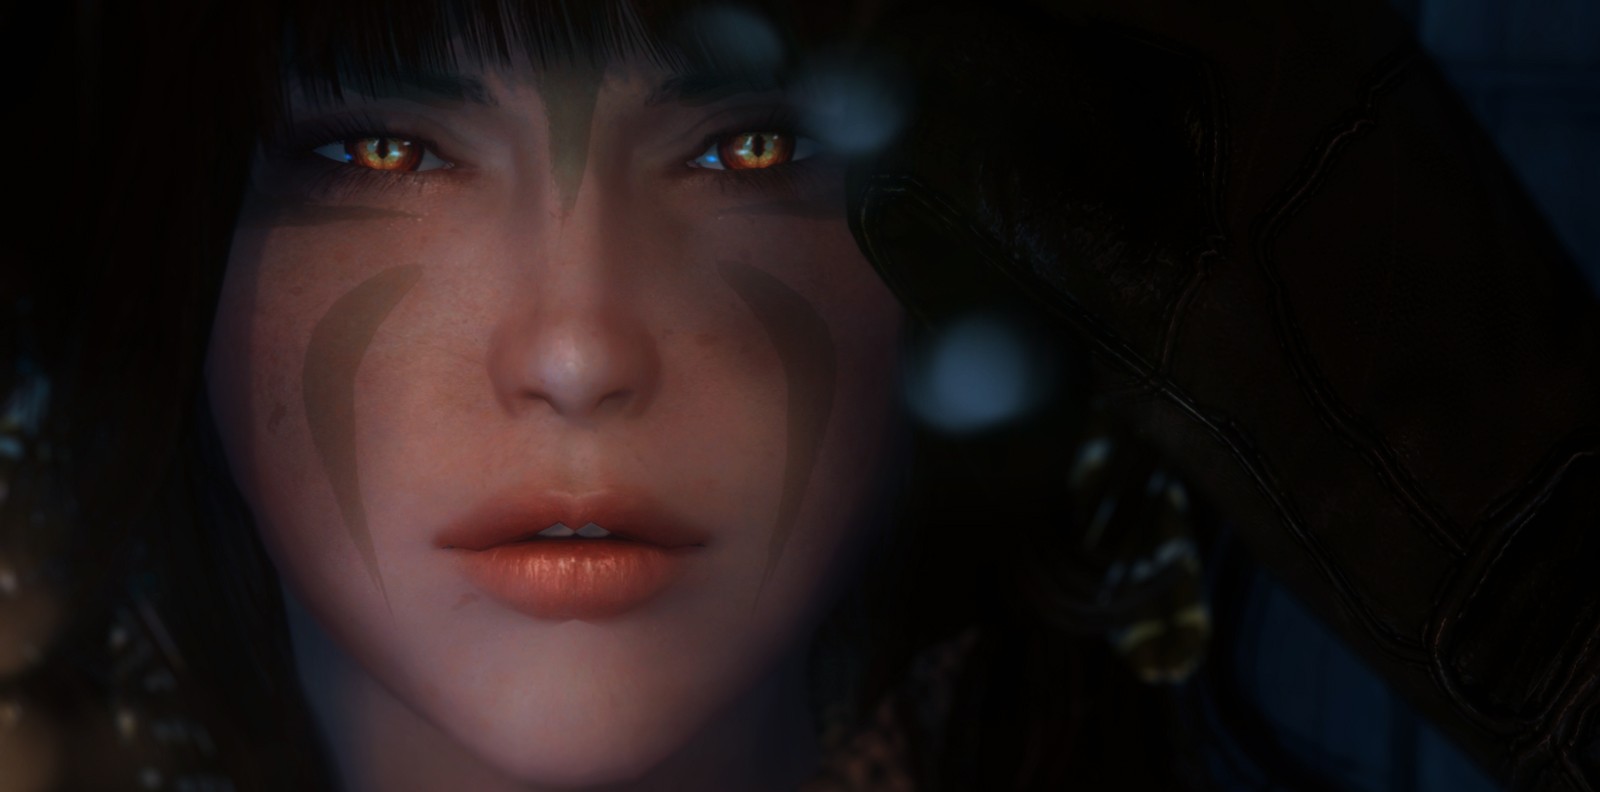 General 1600x792 The Elder Scrolls V: Skyrim women fantasy girl video games face PC gaming modding video game girls closeup RPG